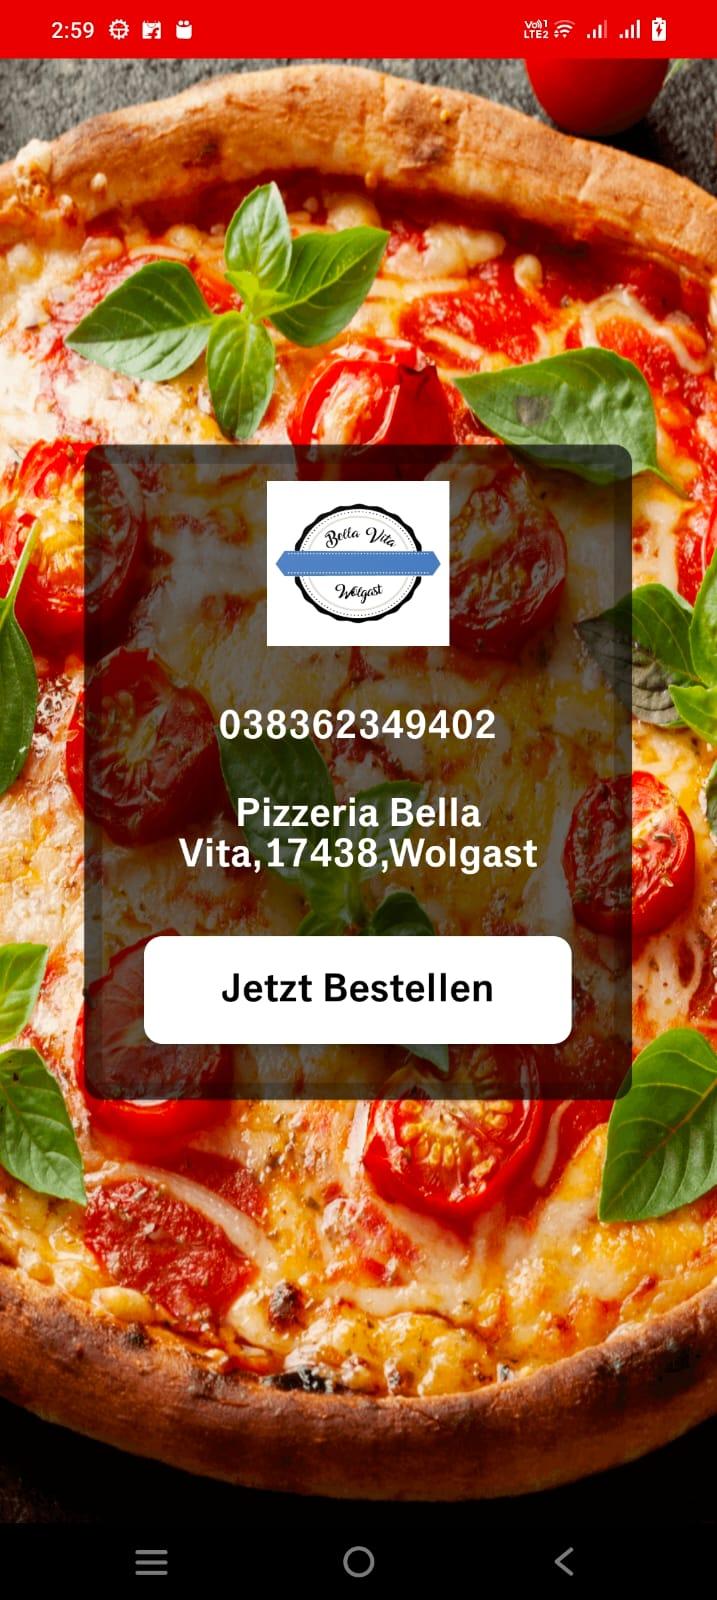 Pizzeria Bella Vita Wolgast APK for Android Download